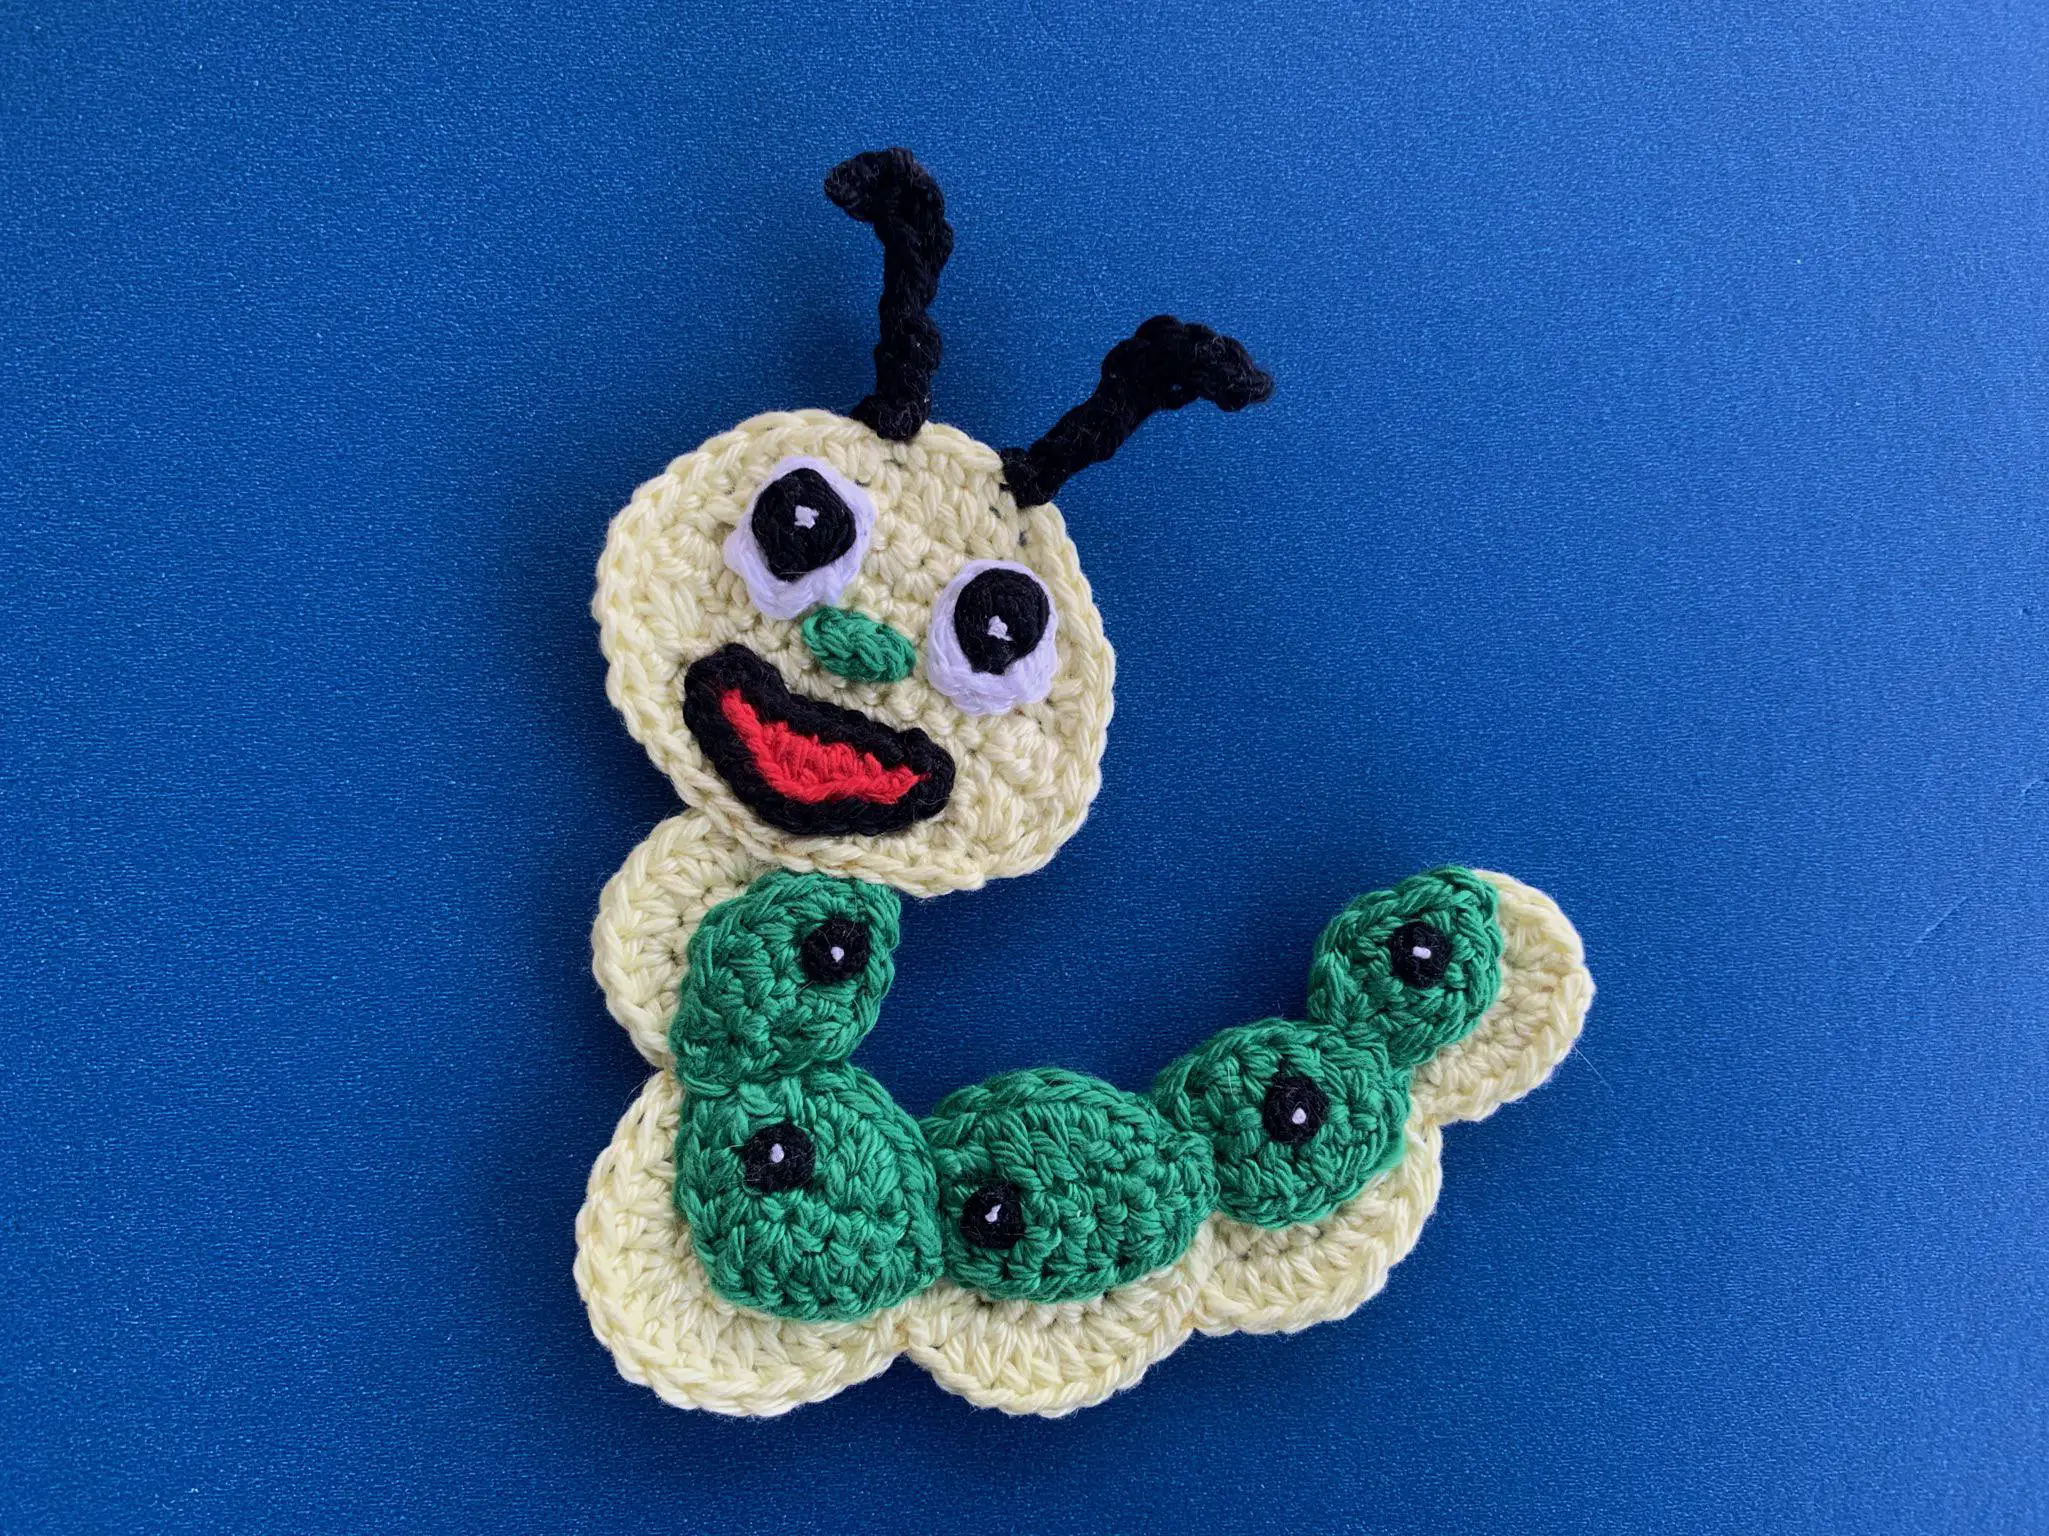 Finished crochet caterpillar 4 ply landscape